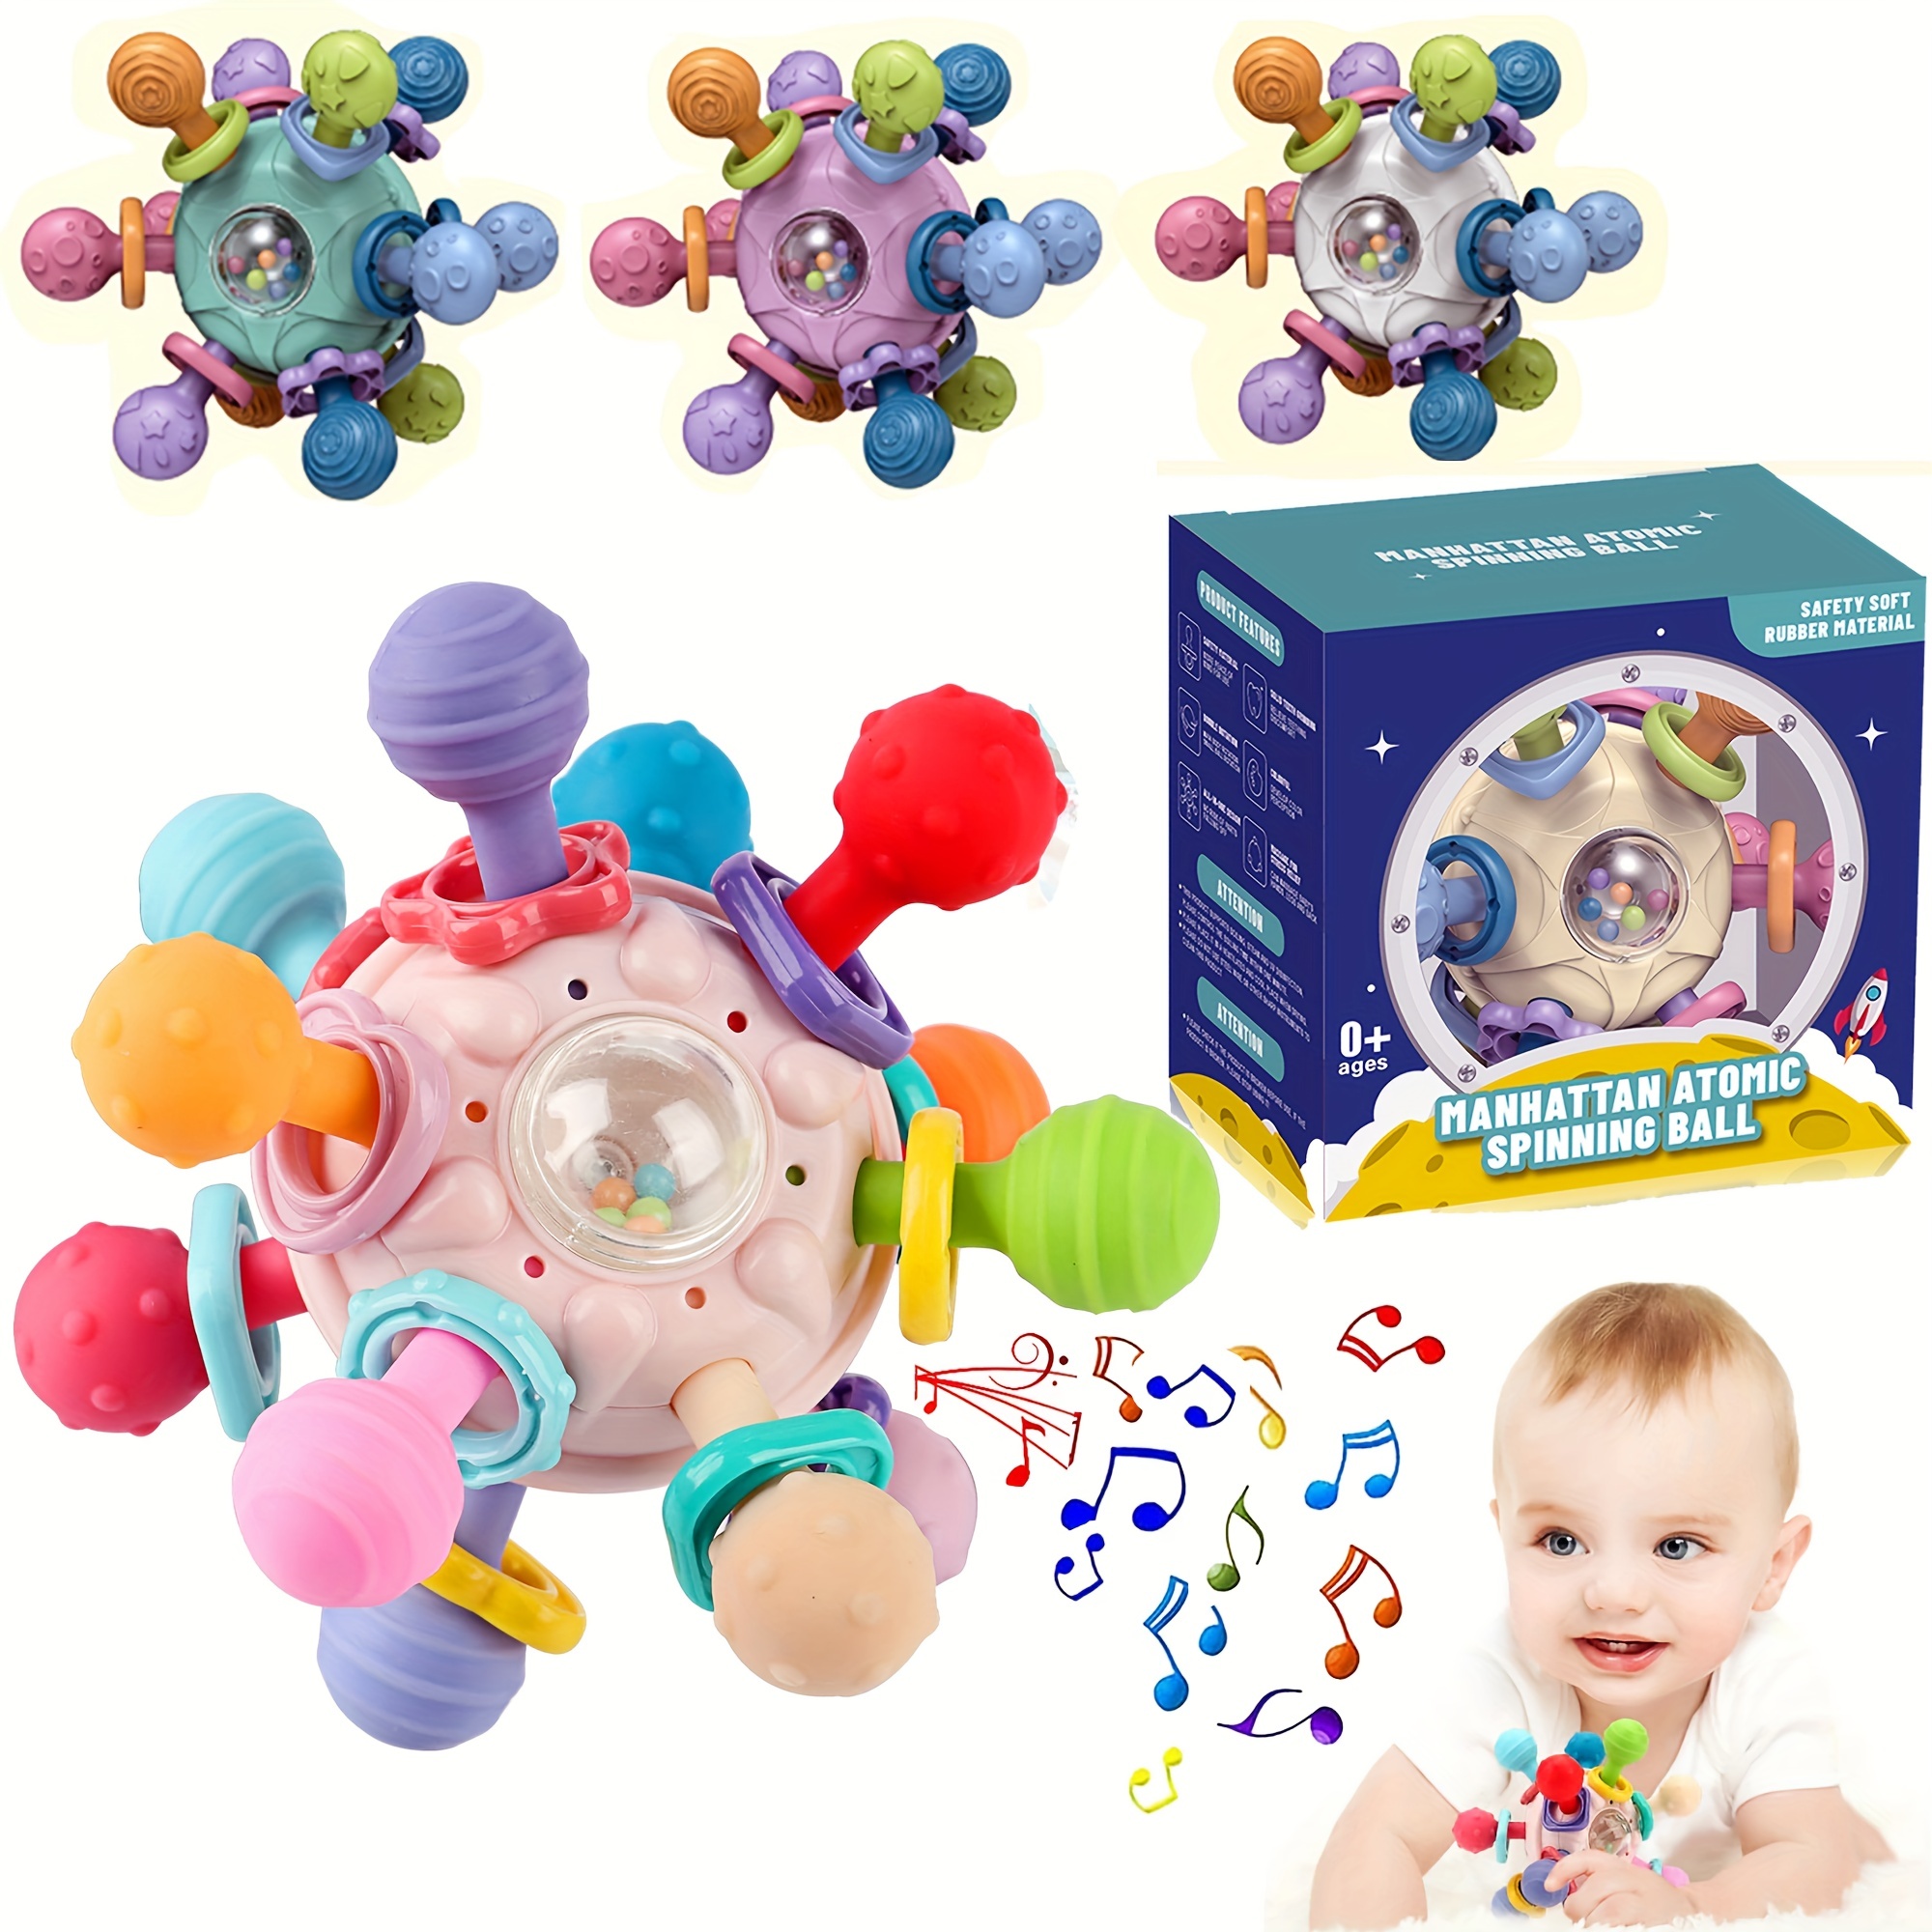 Sonajeros de muñeca para bebés de 0 a 6 meses, calcetines de sonajero para  bebés, juguetes de bebé de 0 a 3 meses, regalo para recién nacidos para